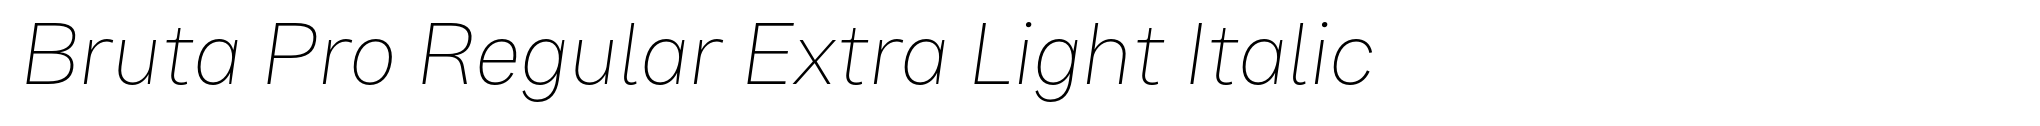 Bruta Pro Regular Extra Light Italic image